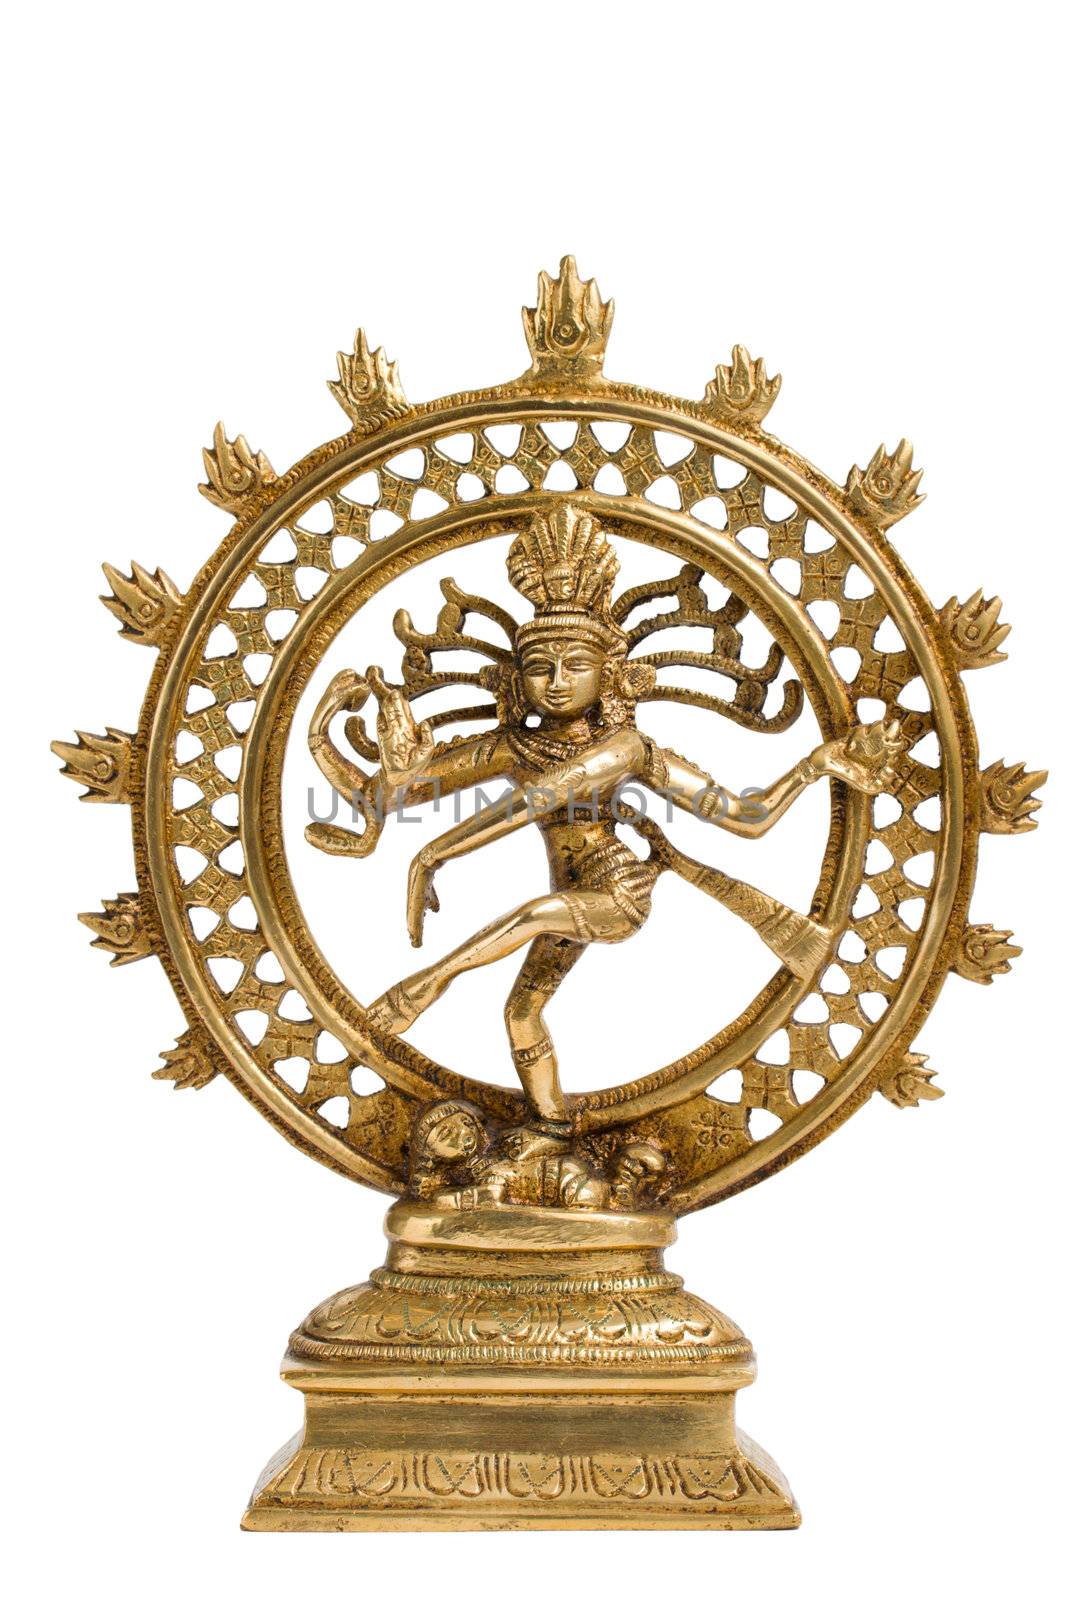 Statue of indian hindu god Shiva Nataraja - Lord of Dance isolated on white